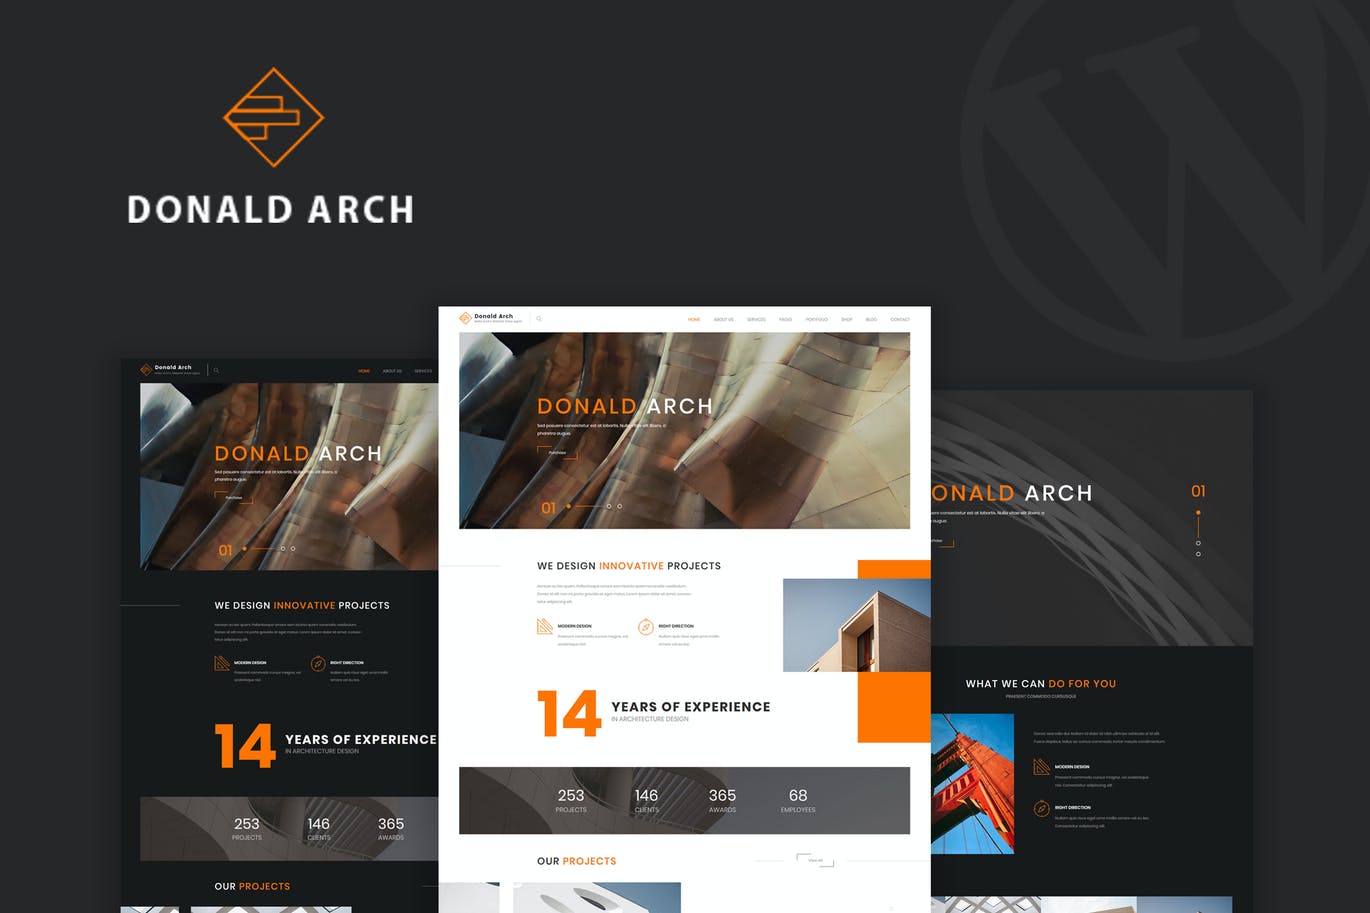 Donald Arch – Creative Architecture WordPress Theme